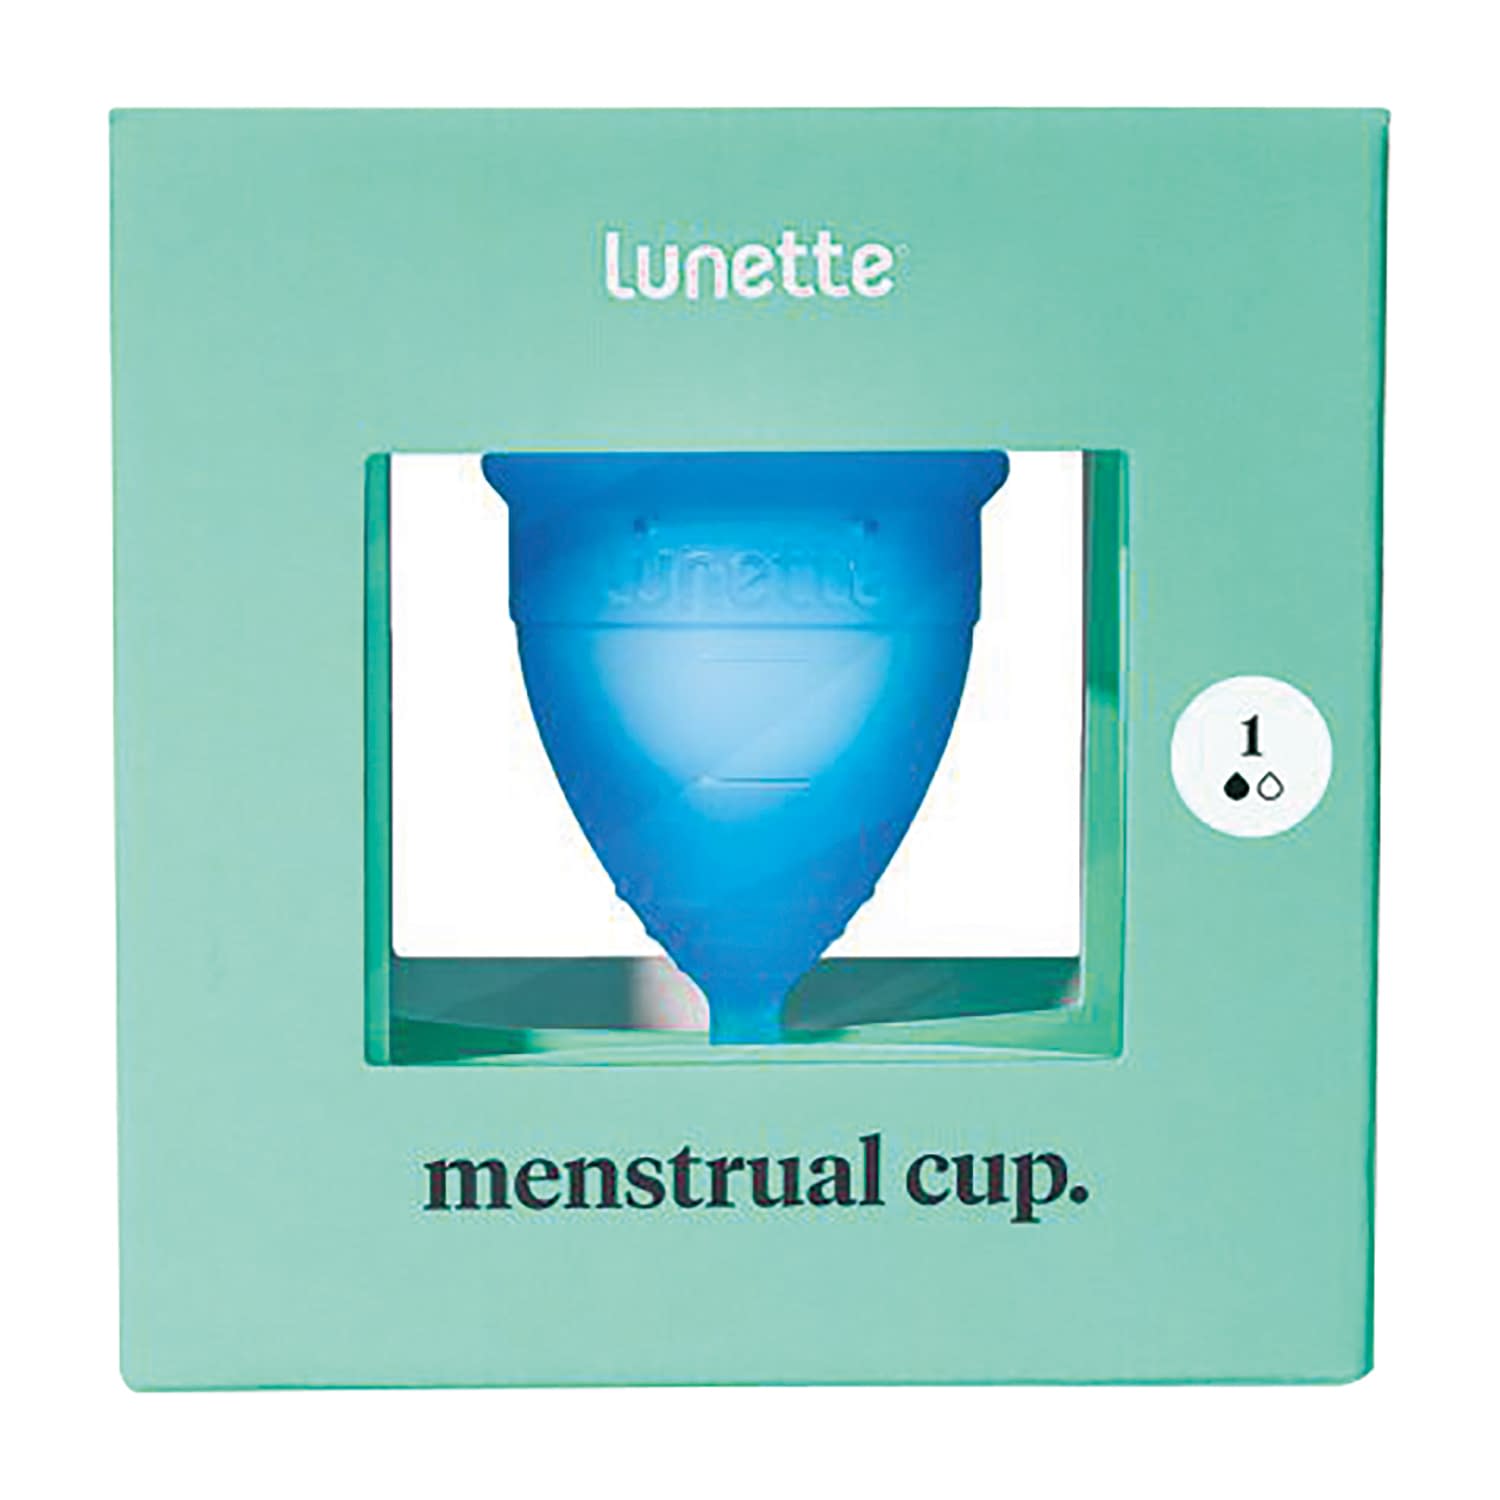 Lunette ルネットカップ（月経カップ） サイズ1 LunetteC1LN217BL1(ショウ)ブルー